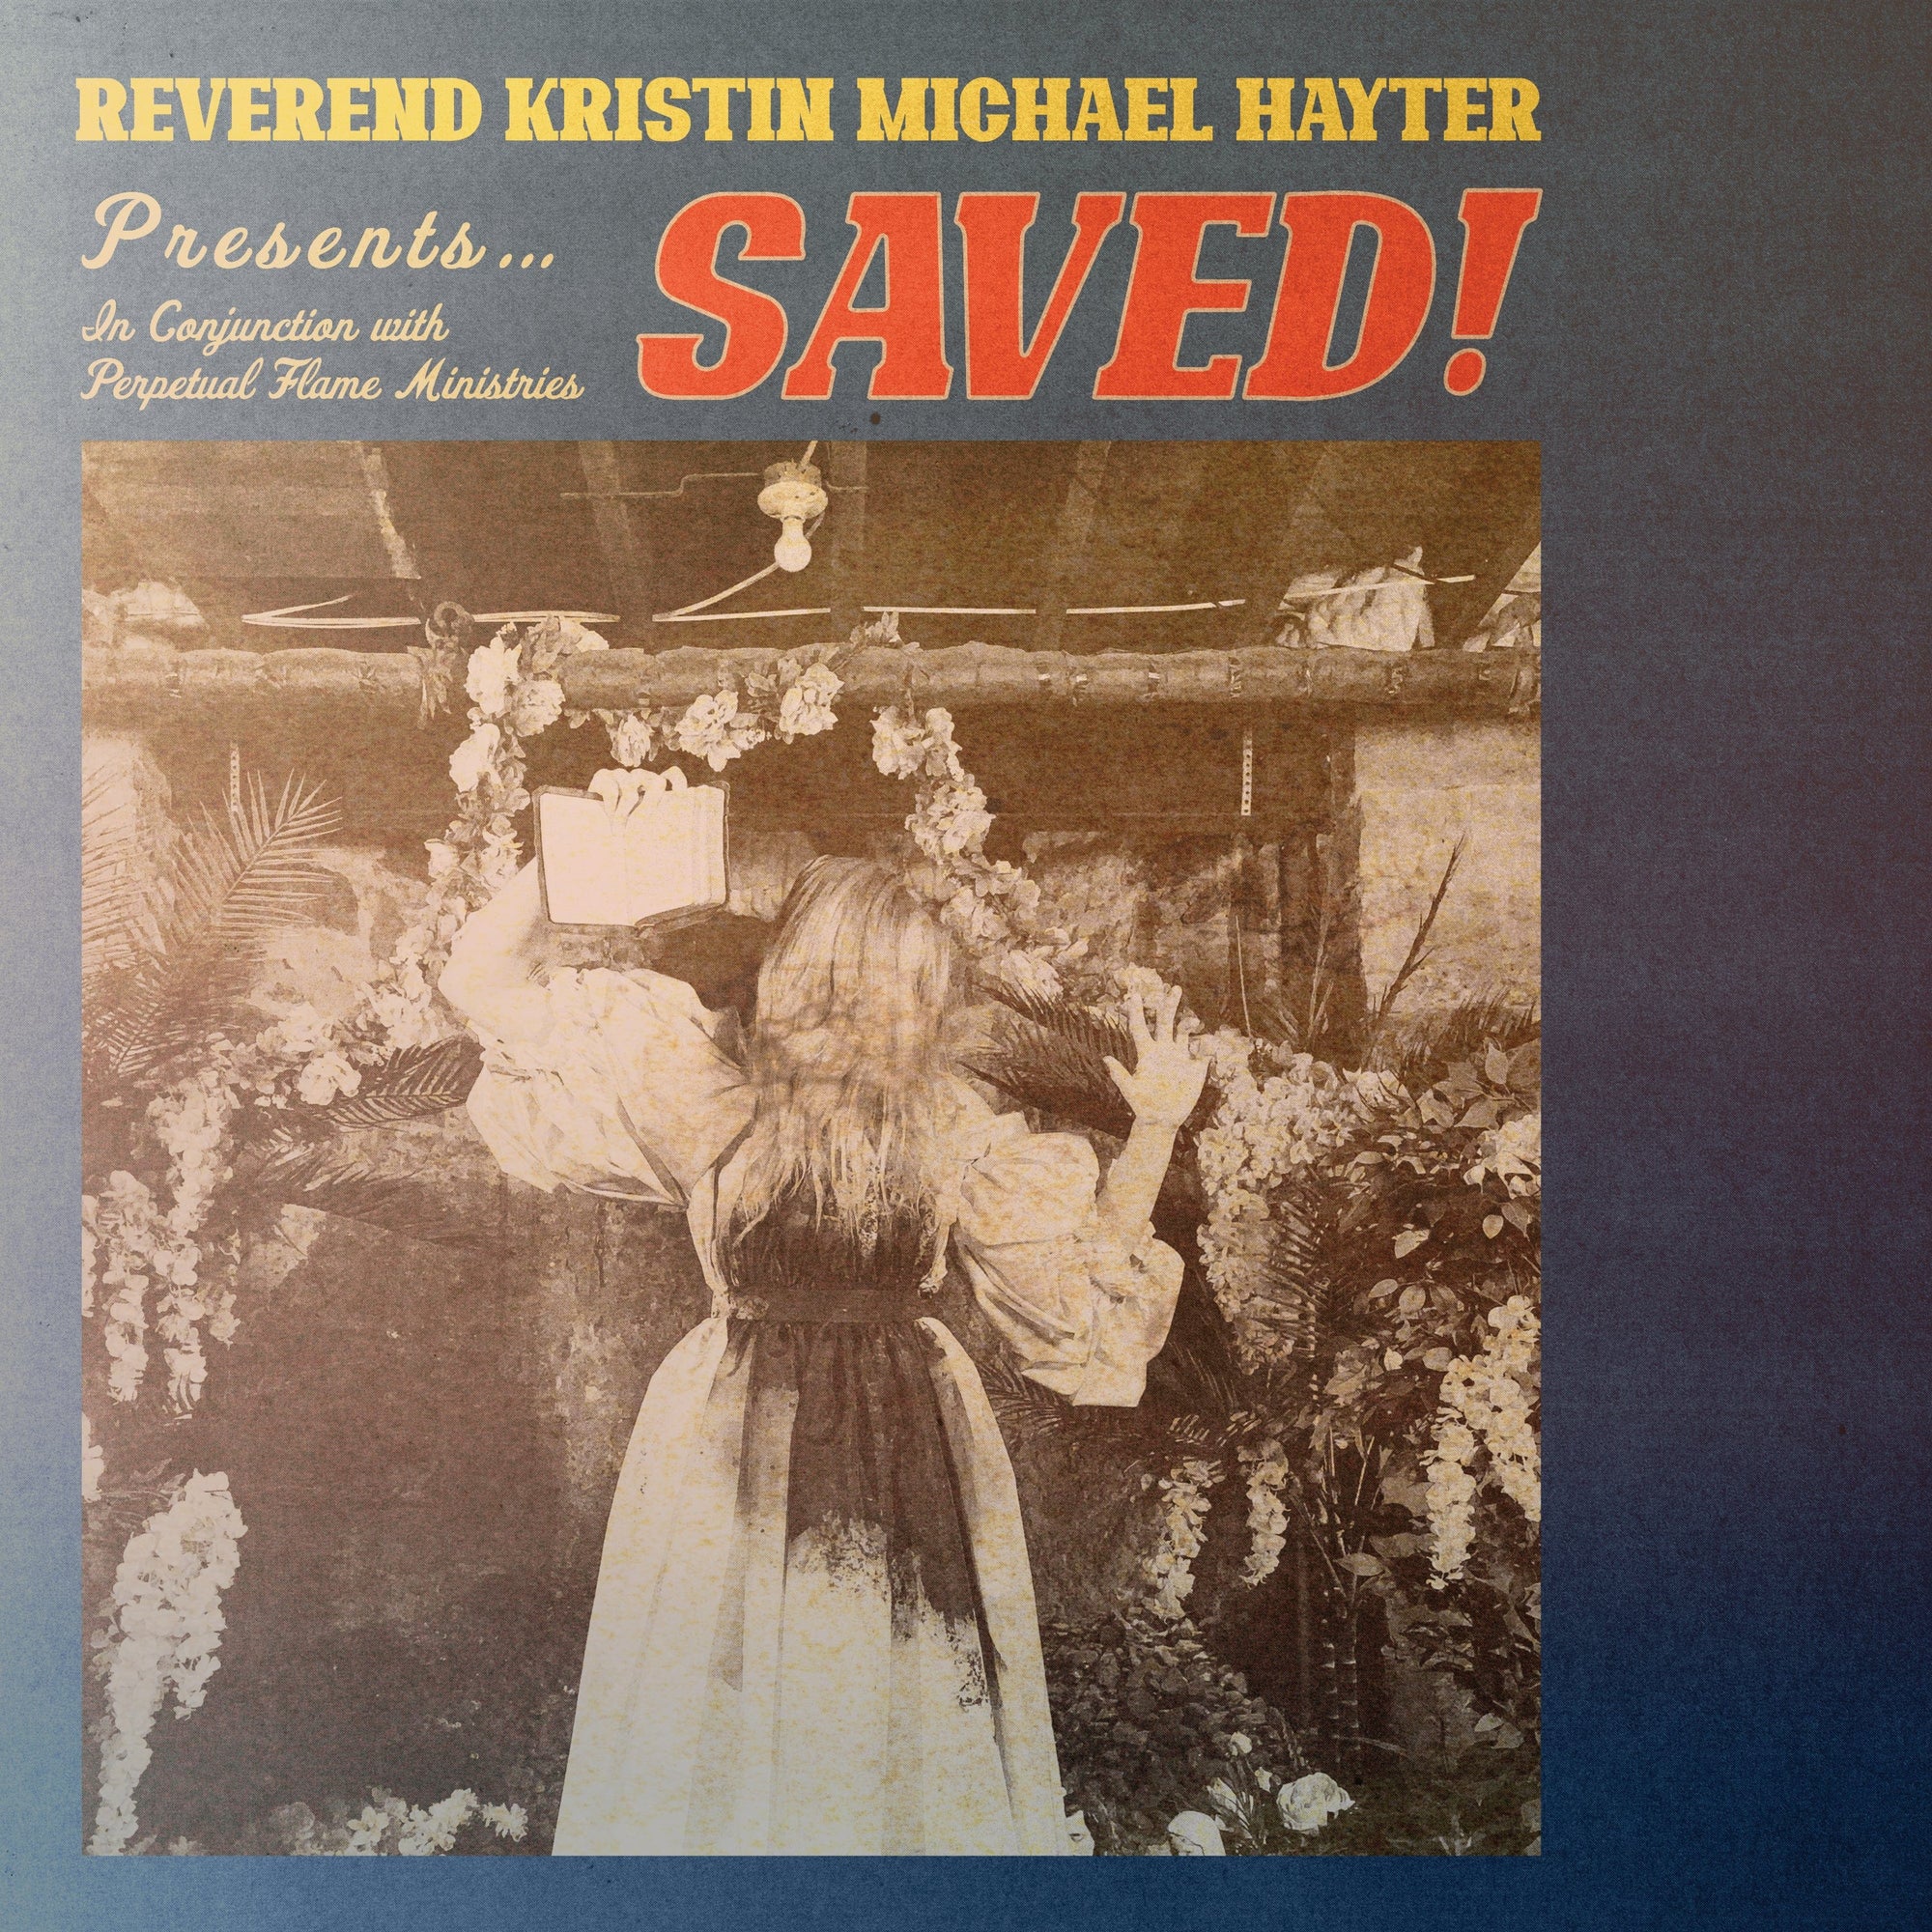 Perpetual Flame Ministries Vinyl Reverend Kristin Michael Hayter "SAVED!" LP